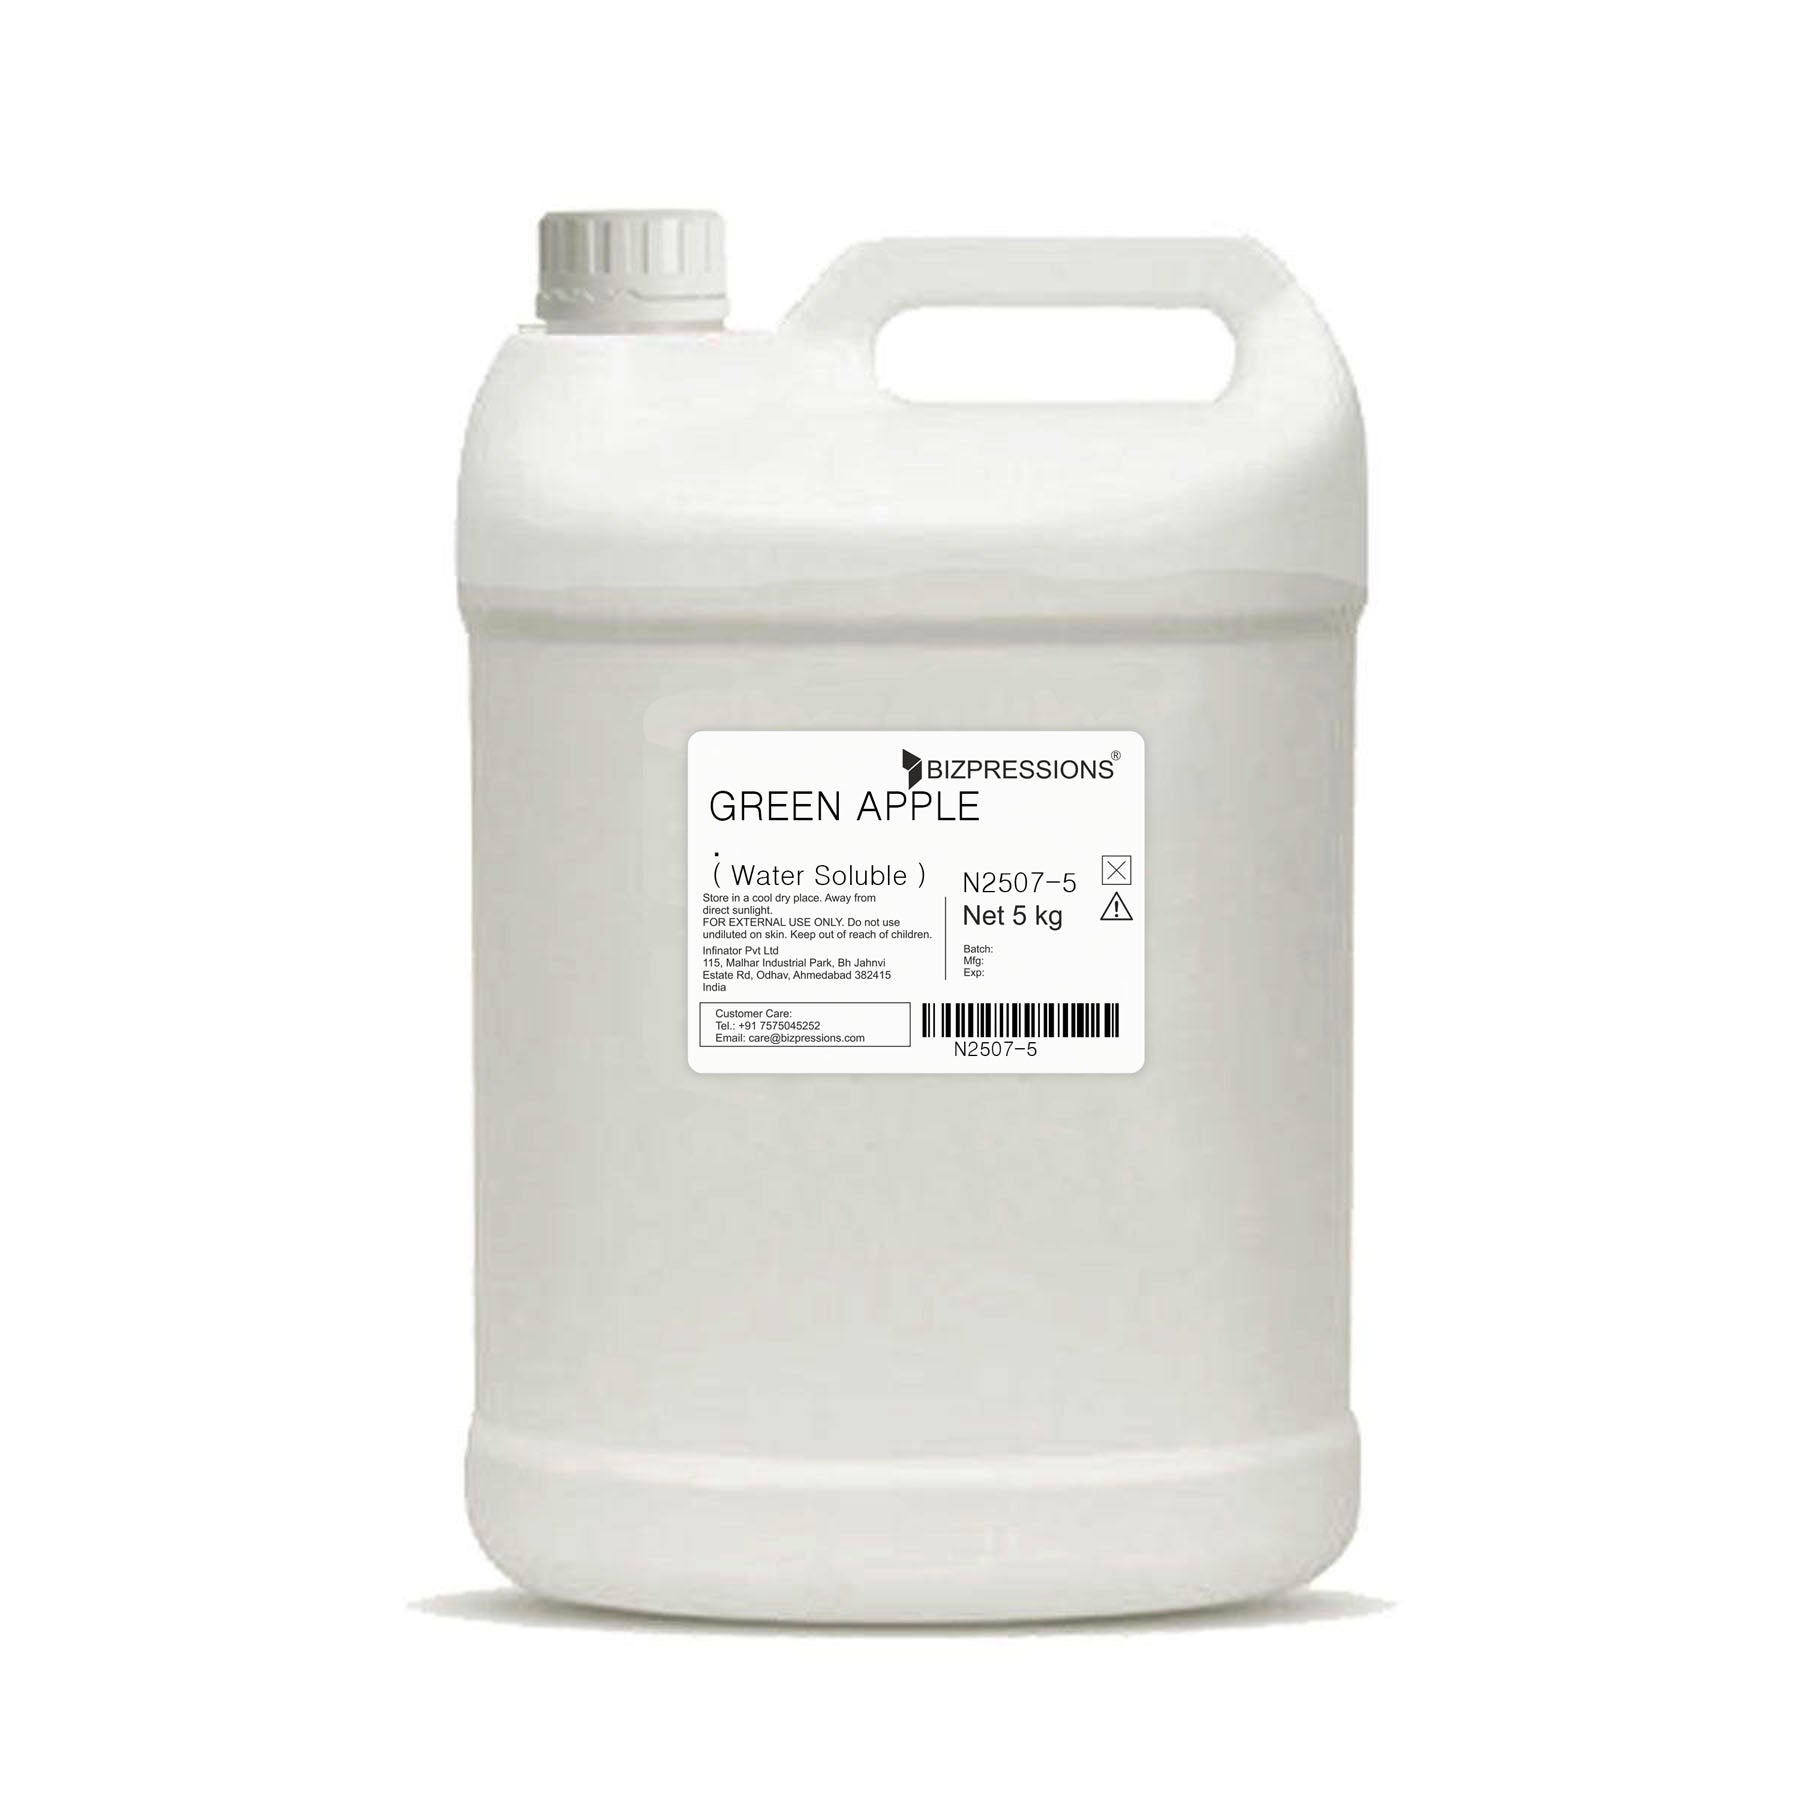 GREEN APPLE W/S - Fragrance ( Water Soluble ) - 5 kg